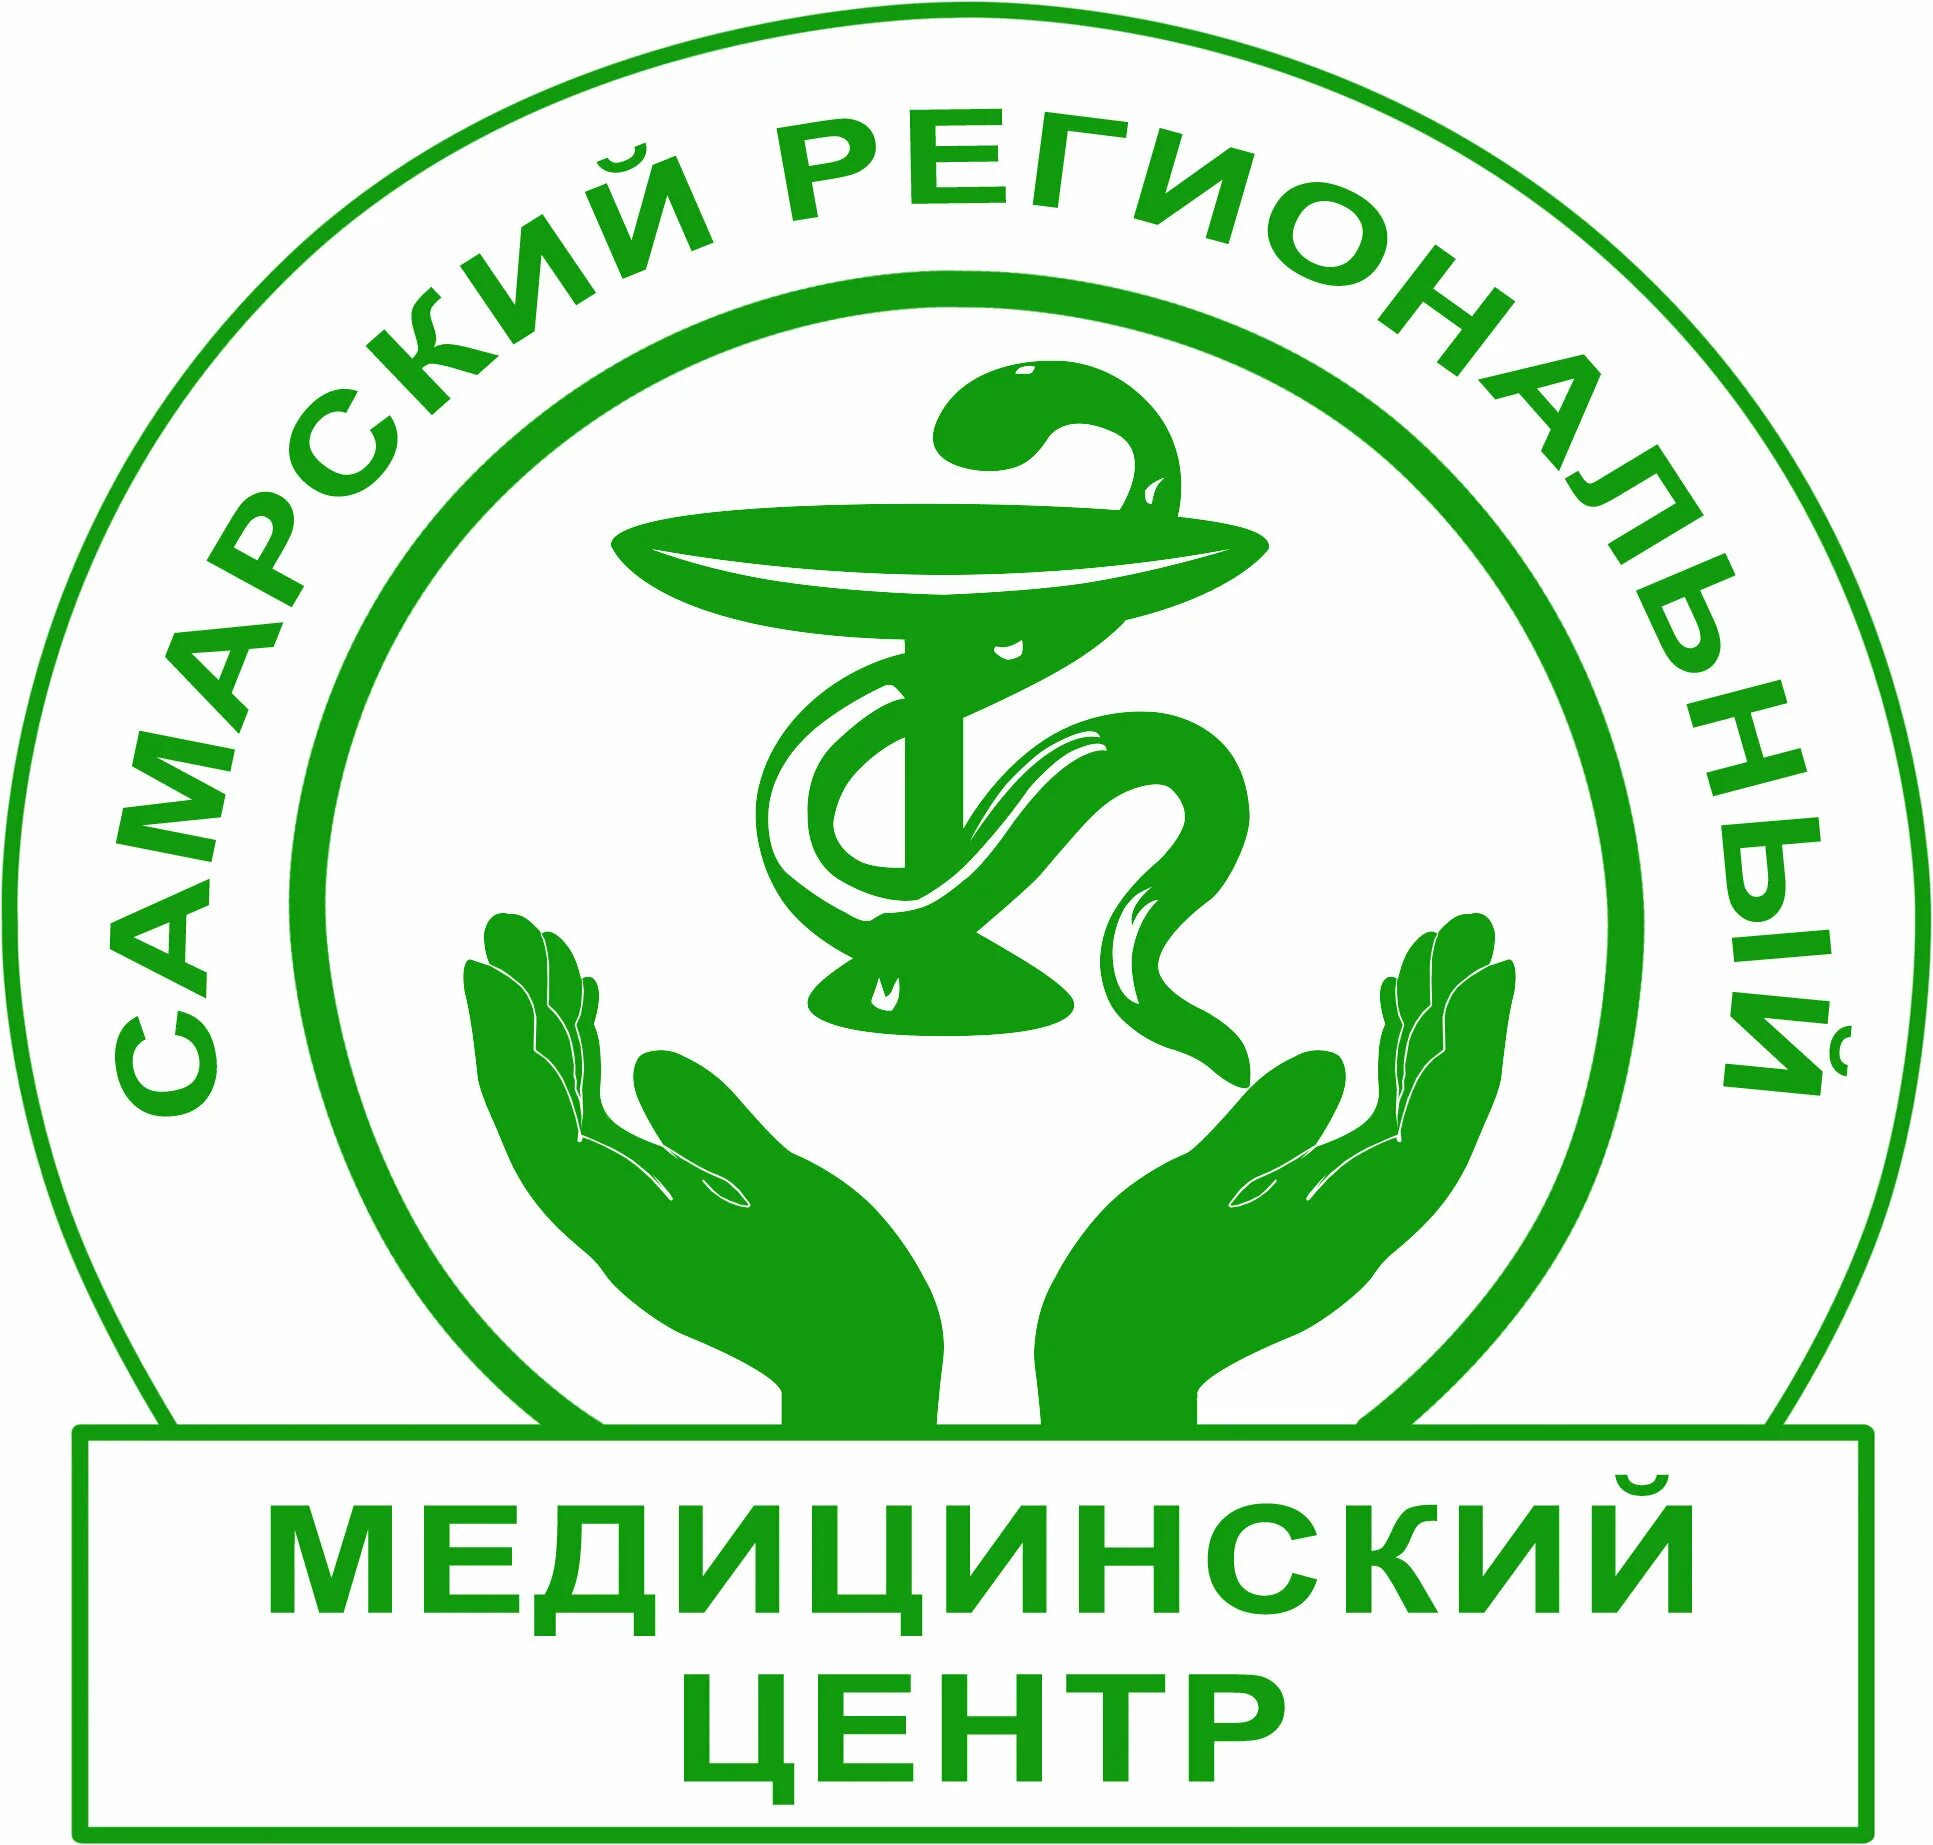 Медицинский центр Самарский. Эмблемы медицинских учреждений. Медицинский центр Самара логотип. Самарский региональный медицинский центр в Сызрани. Медицинский центр сызрань телефон